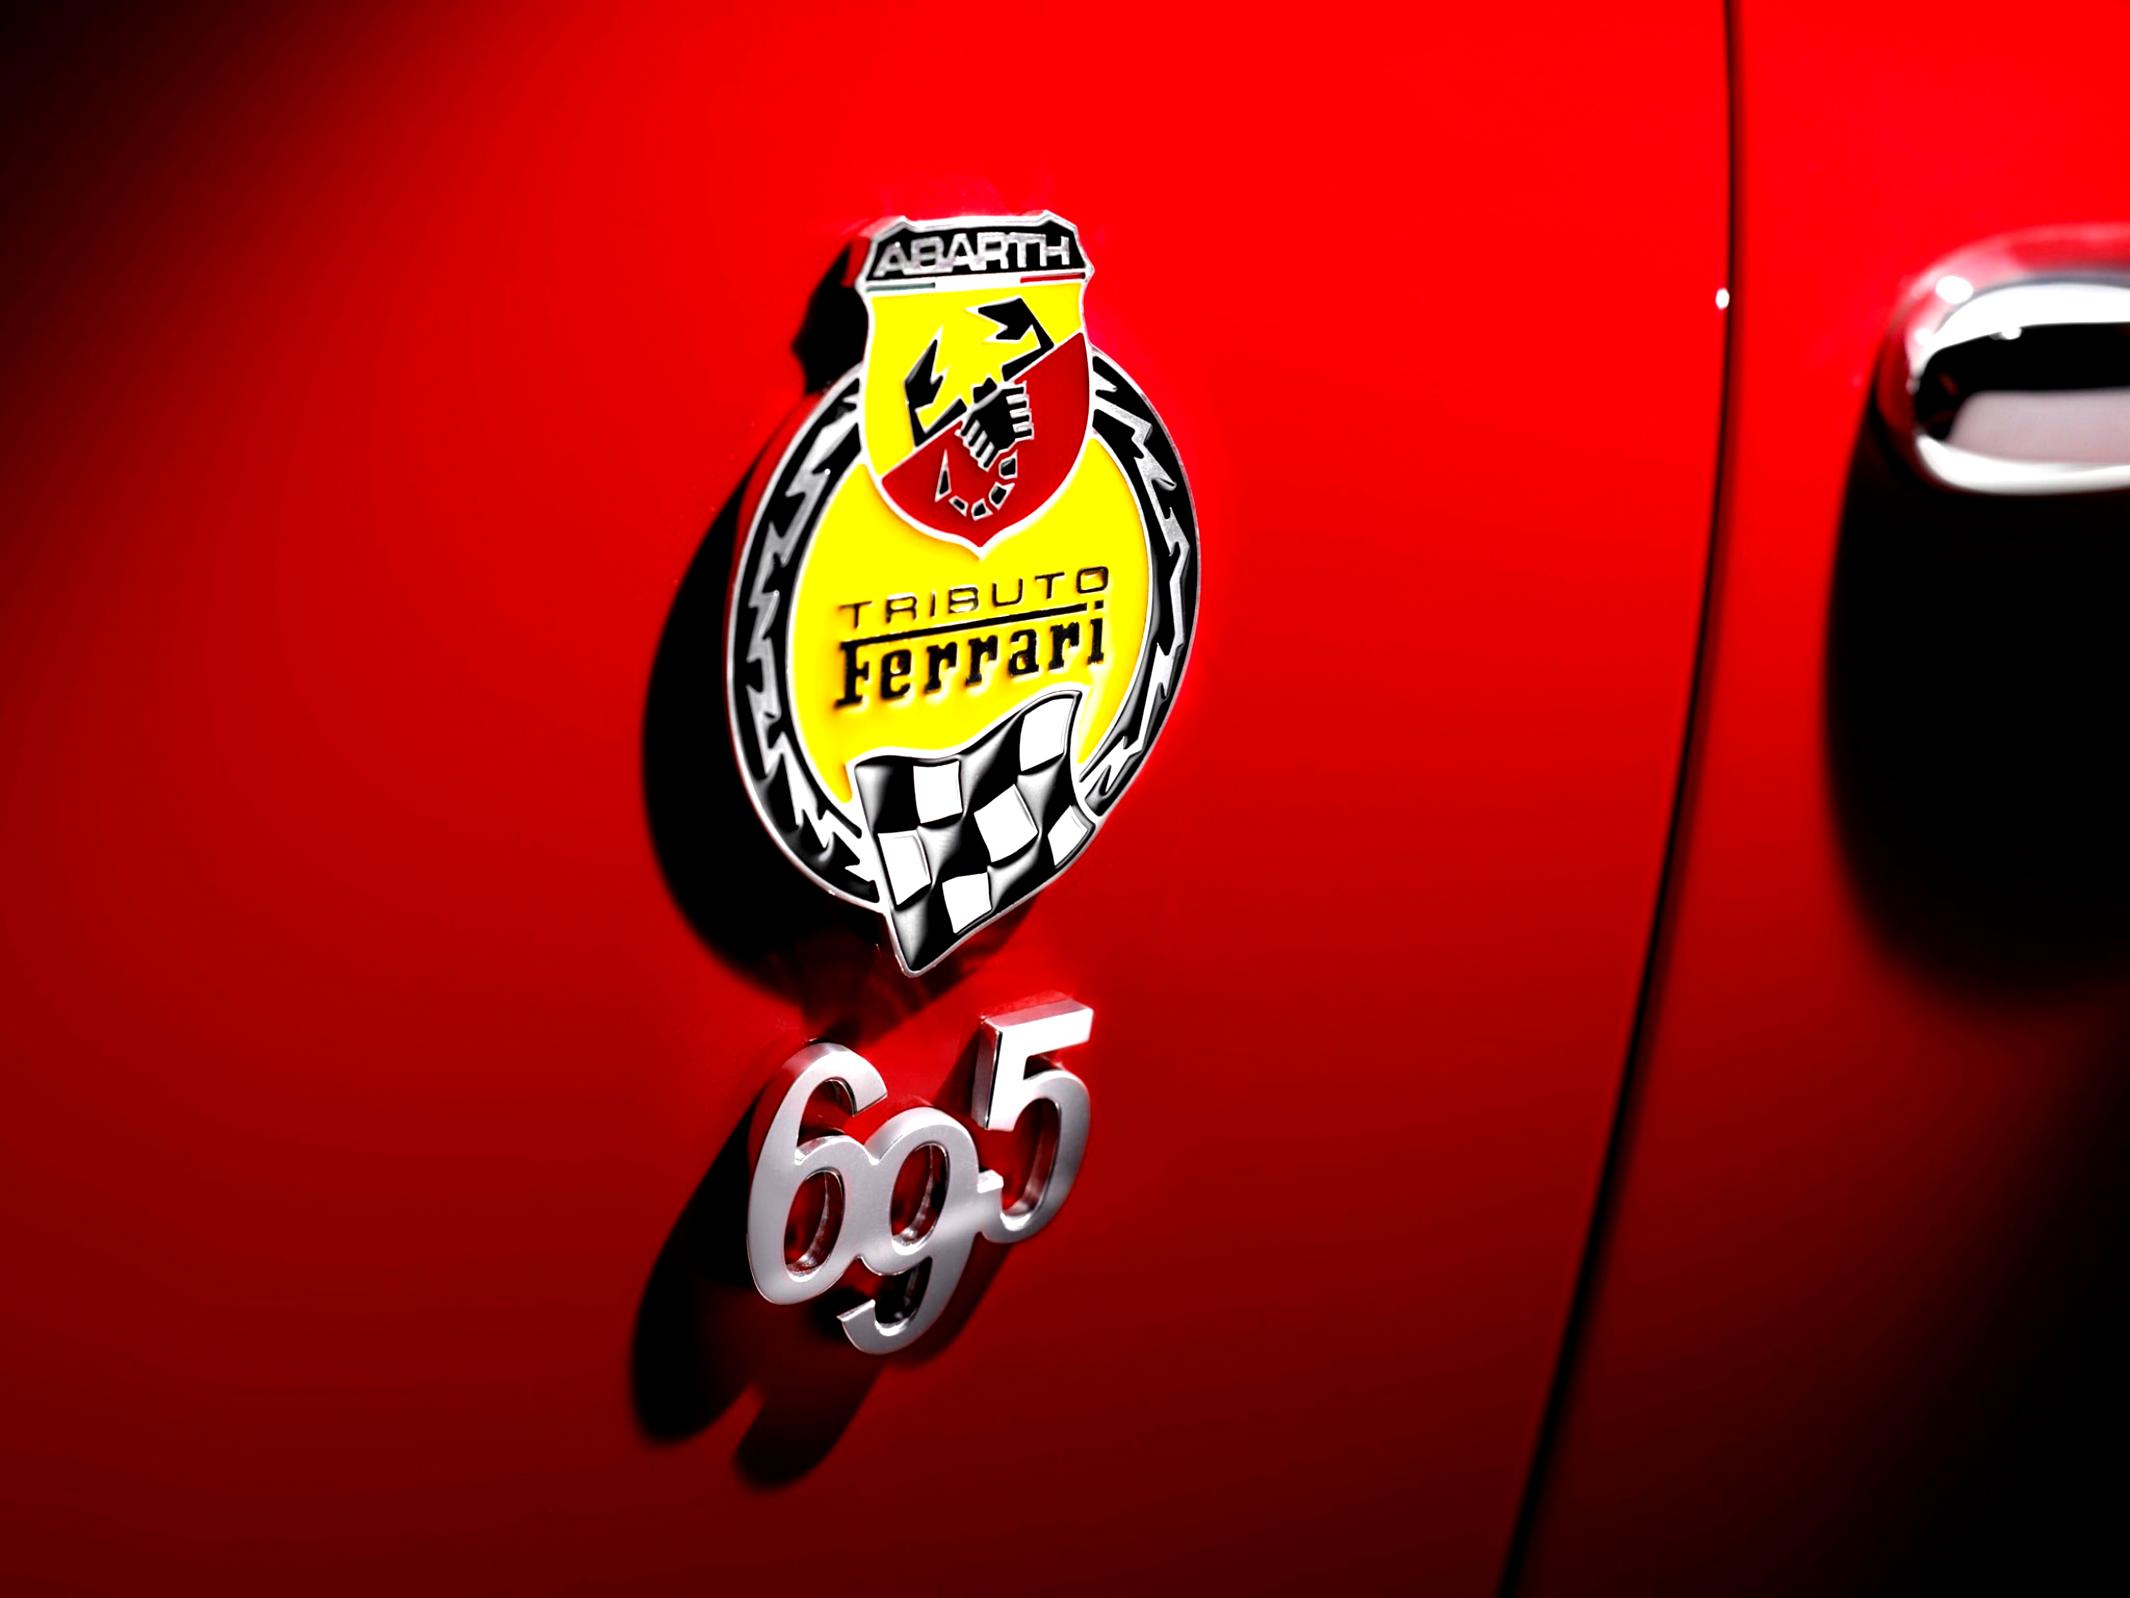 Fiat 500 Abarth 695 Tributo Ferrari 2009 #16